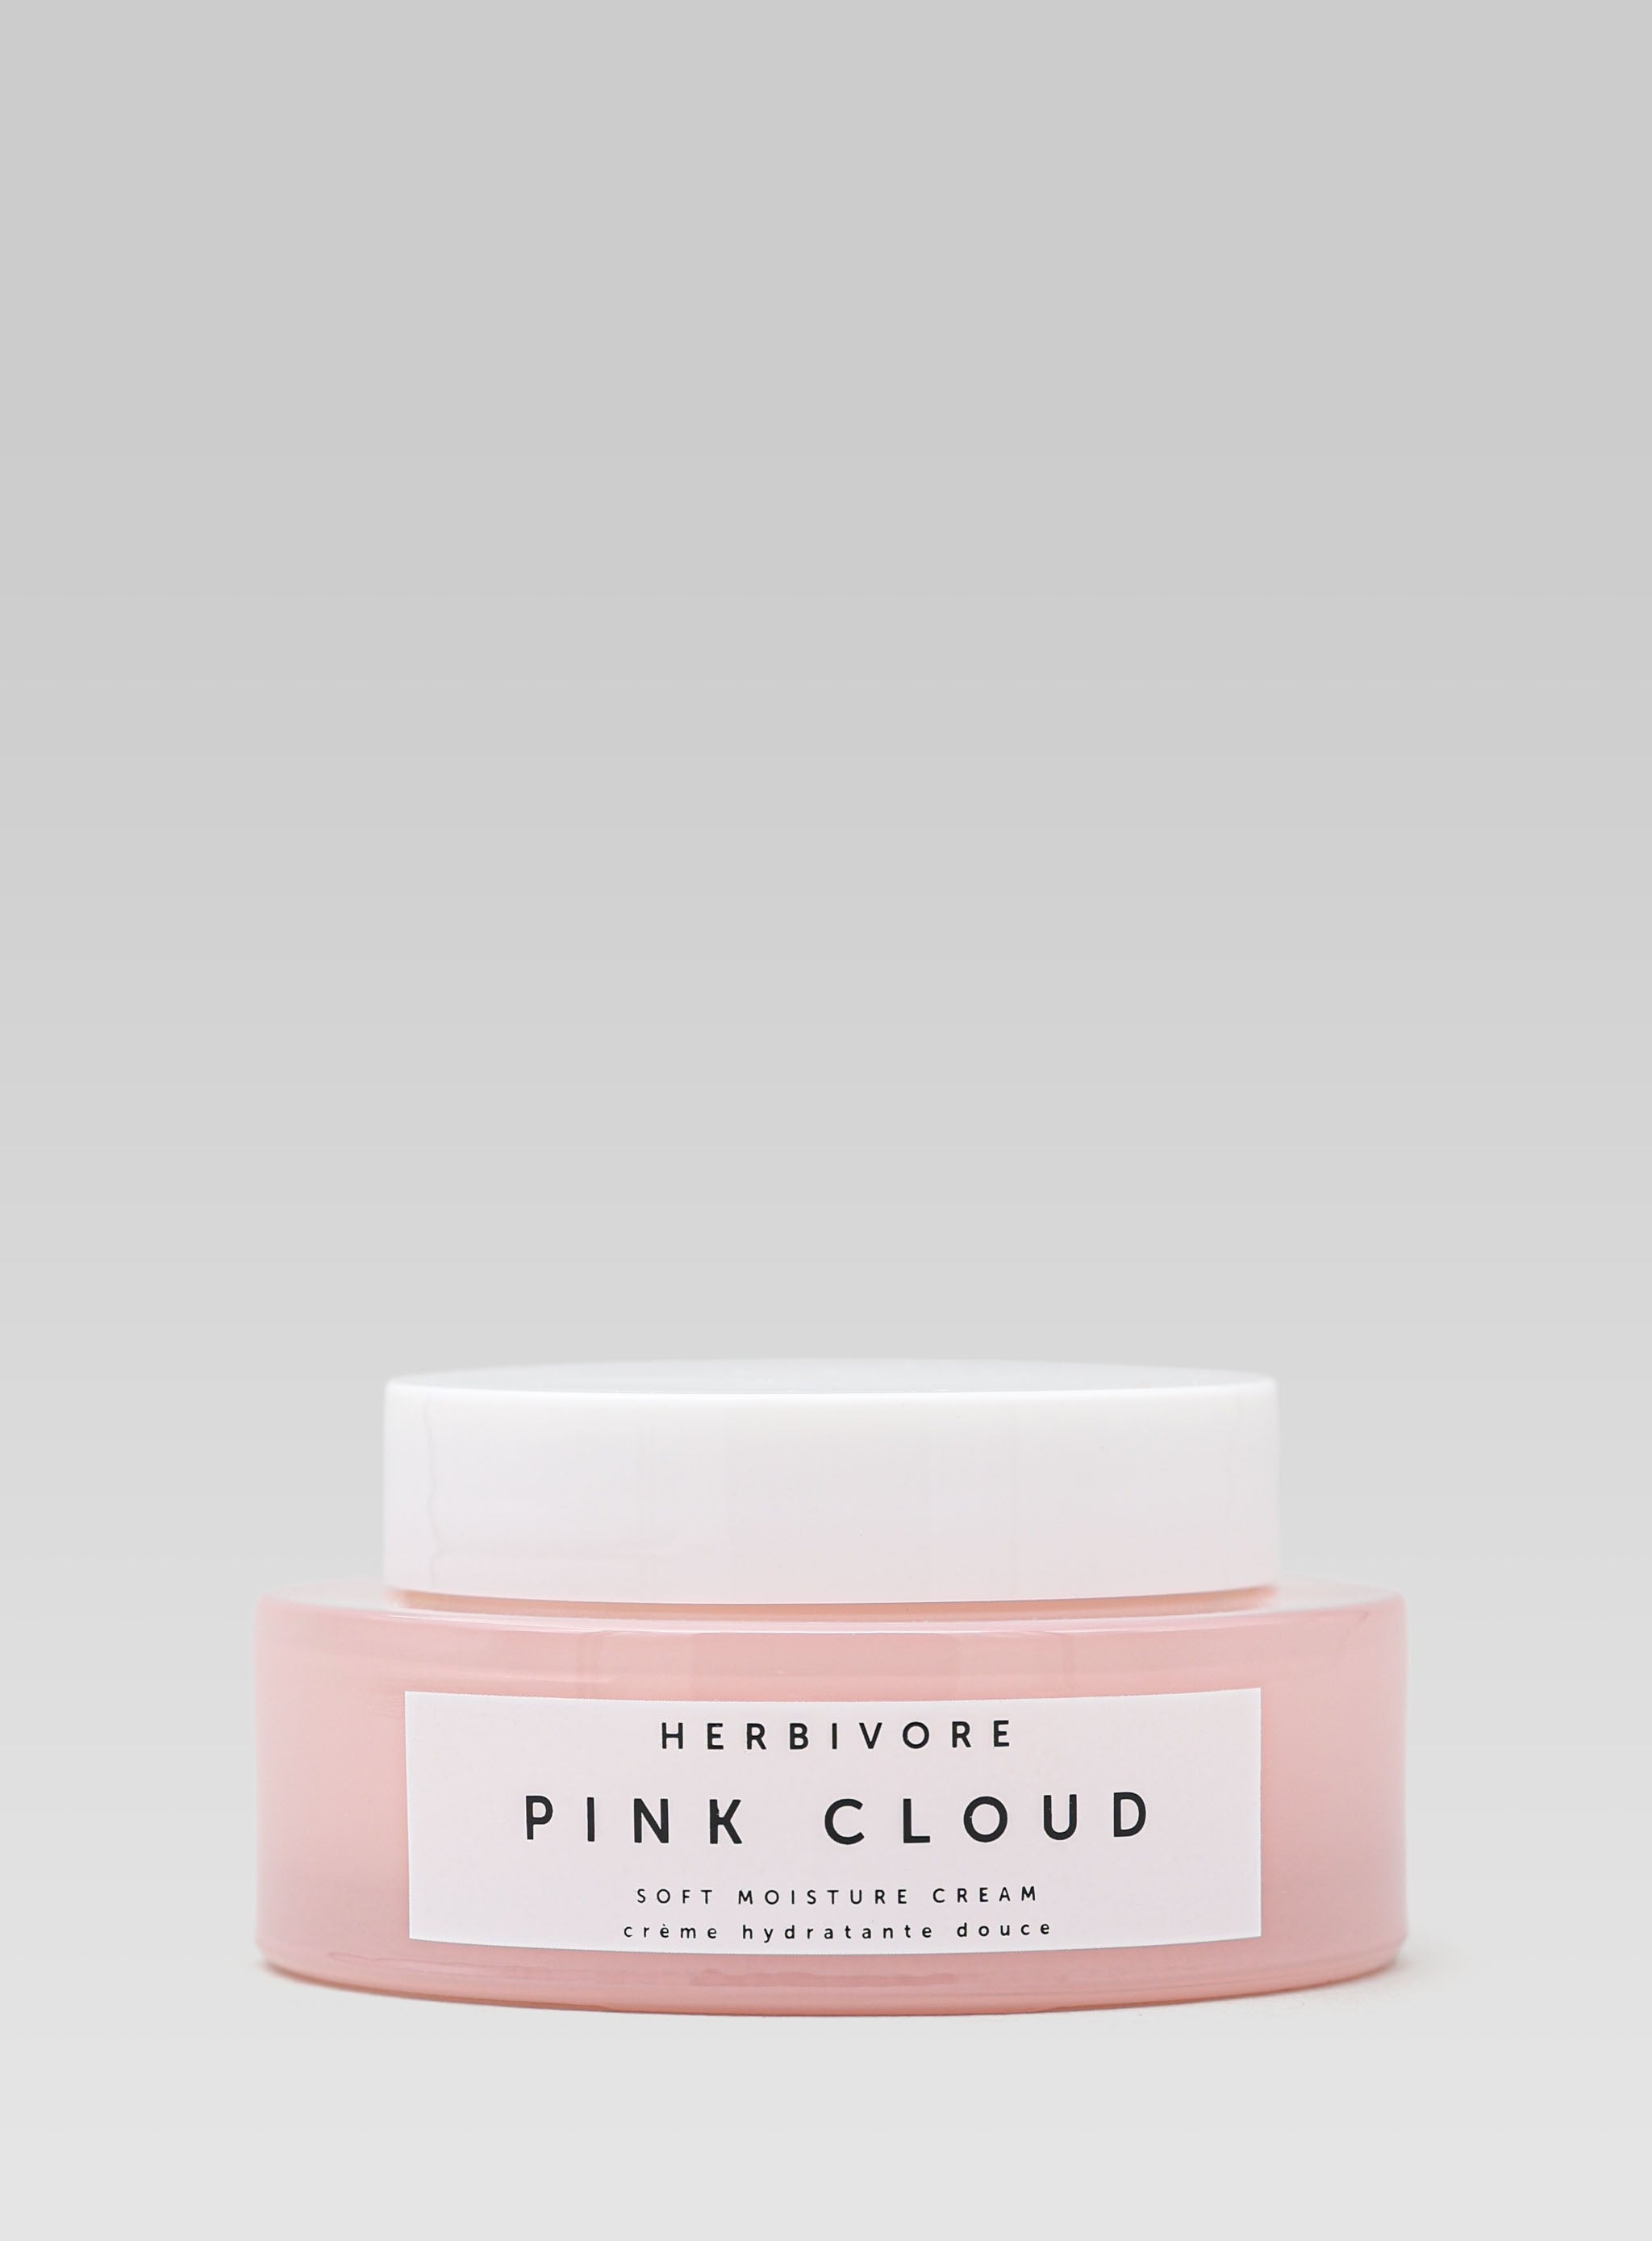 HERBIVORE BOTANICALS Pink Cloud Soft Moisture Cream product shot 